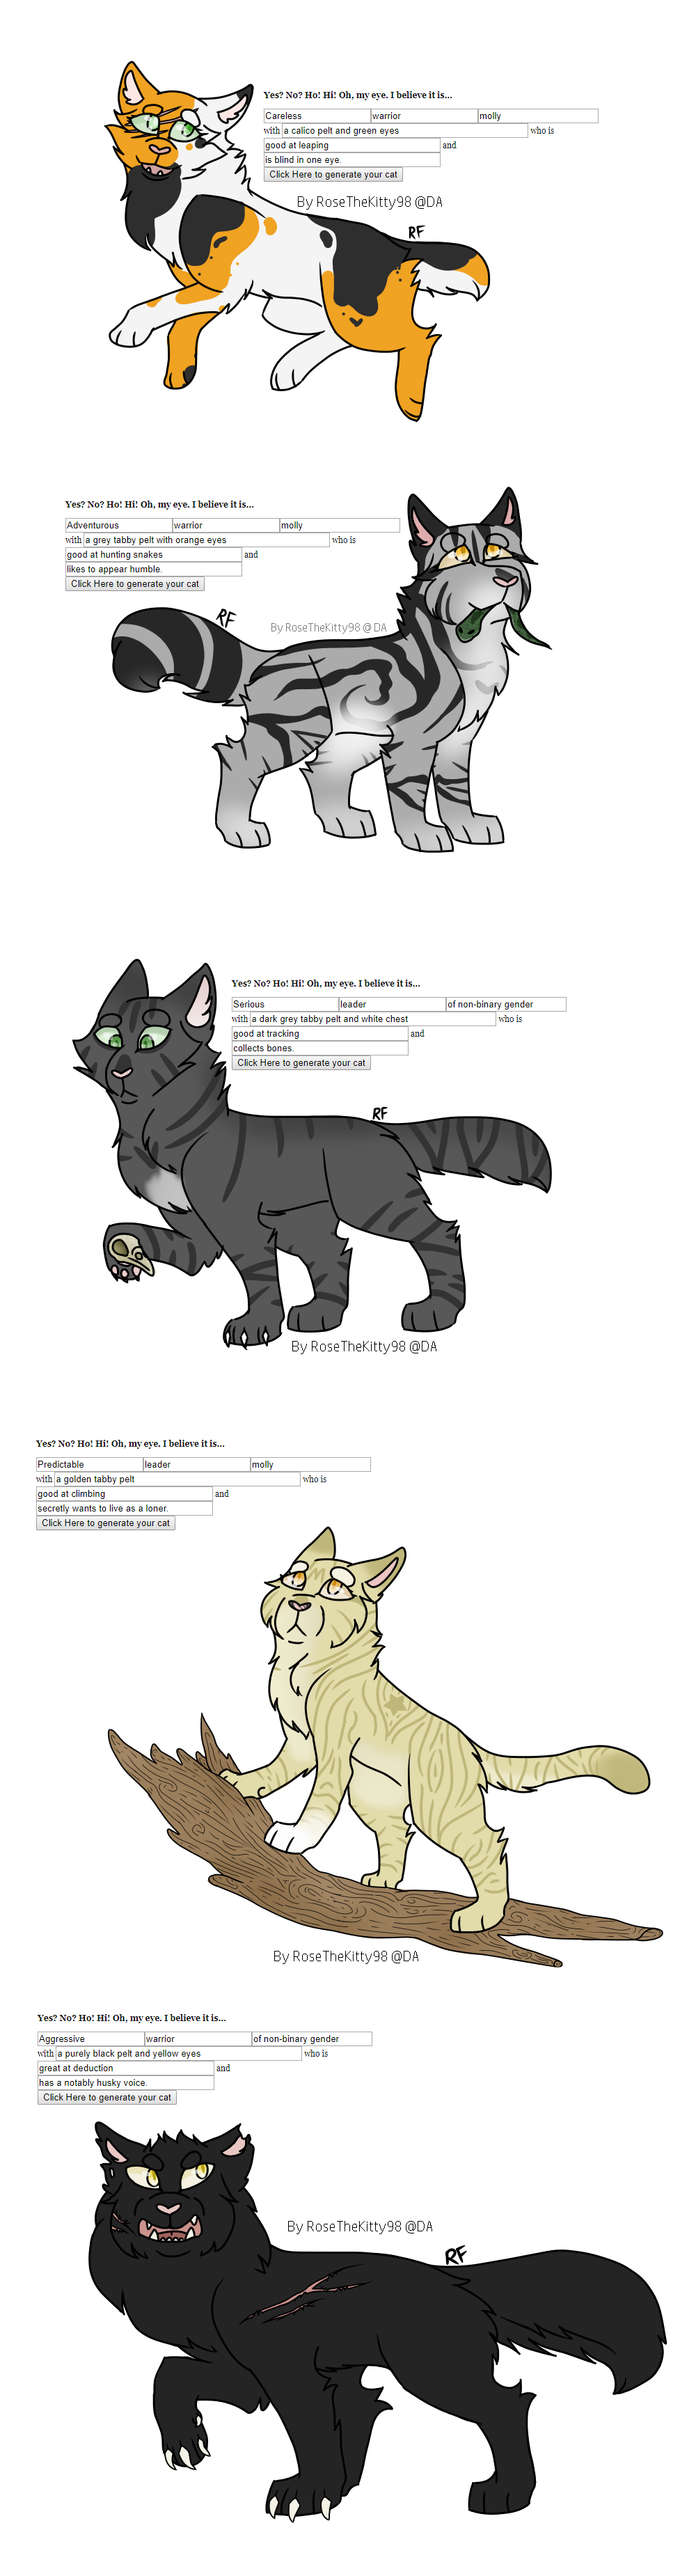 warrior-cat-oc-template-merrychristmaswishes-info